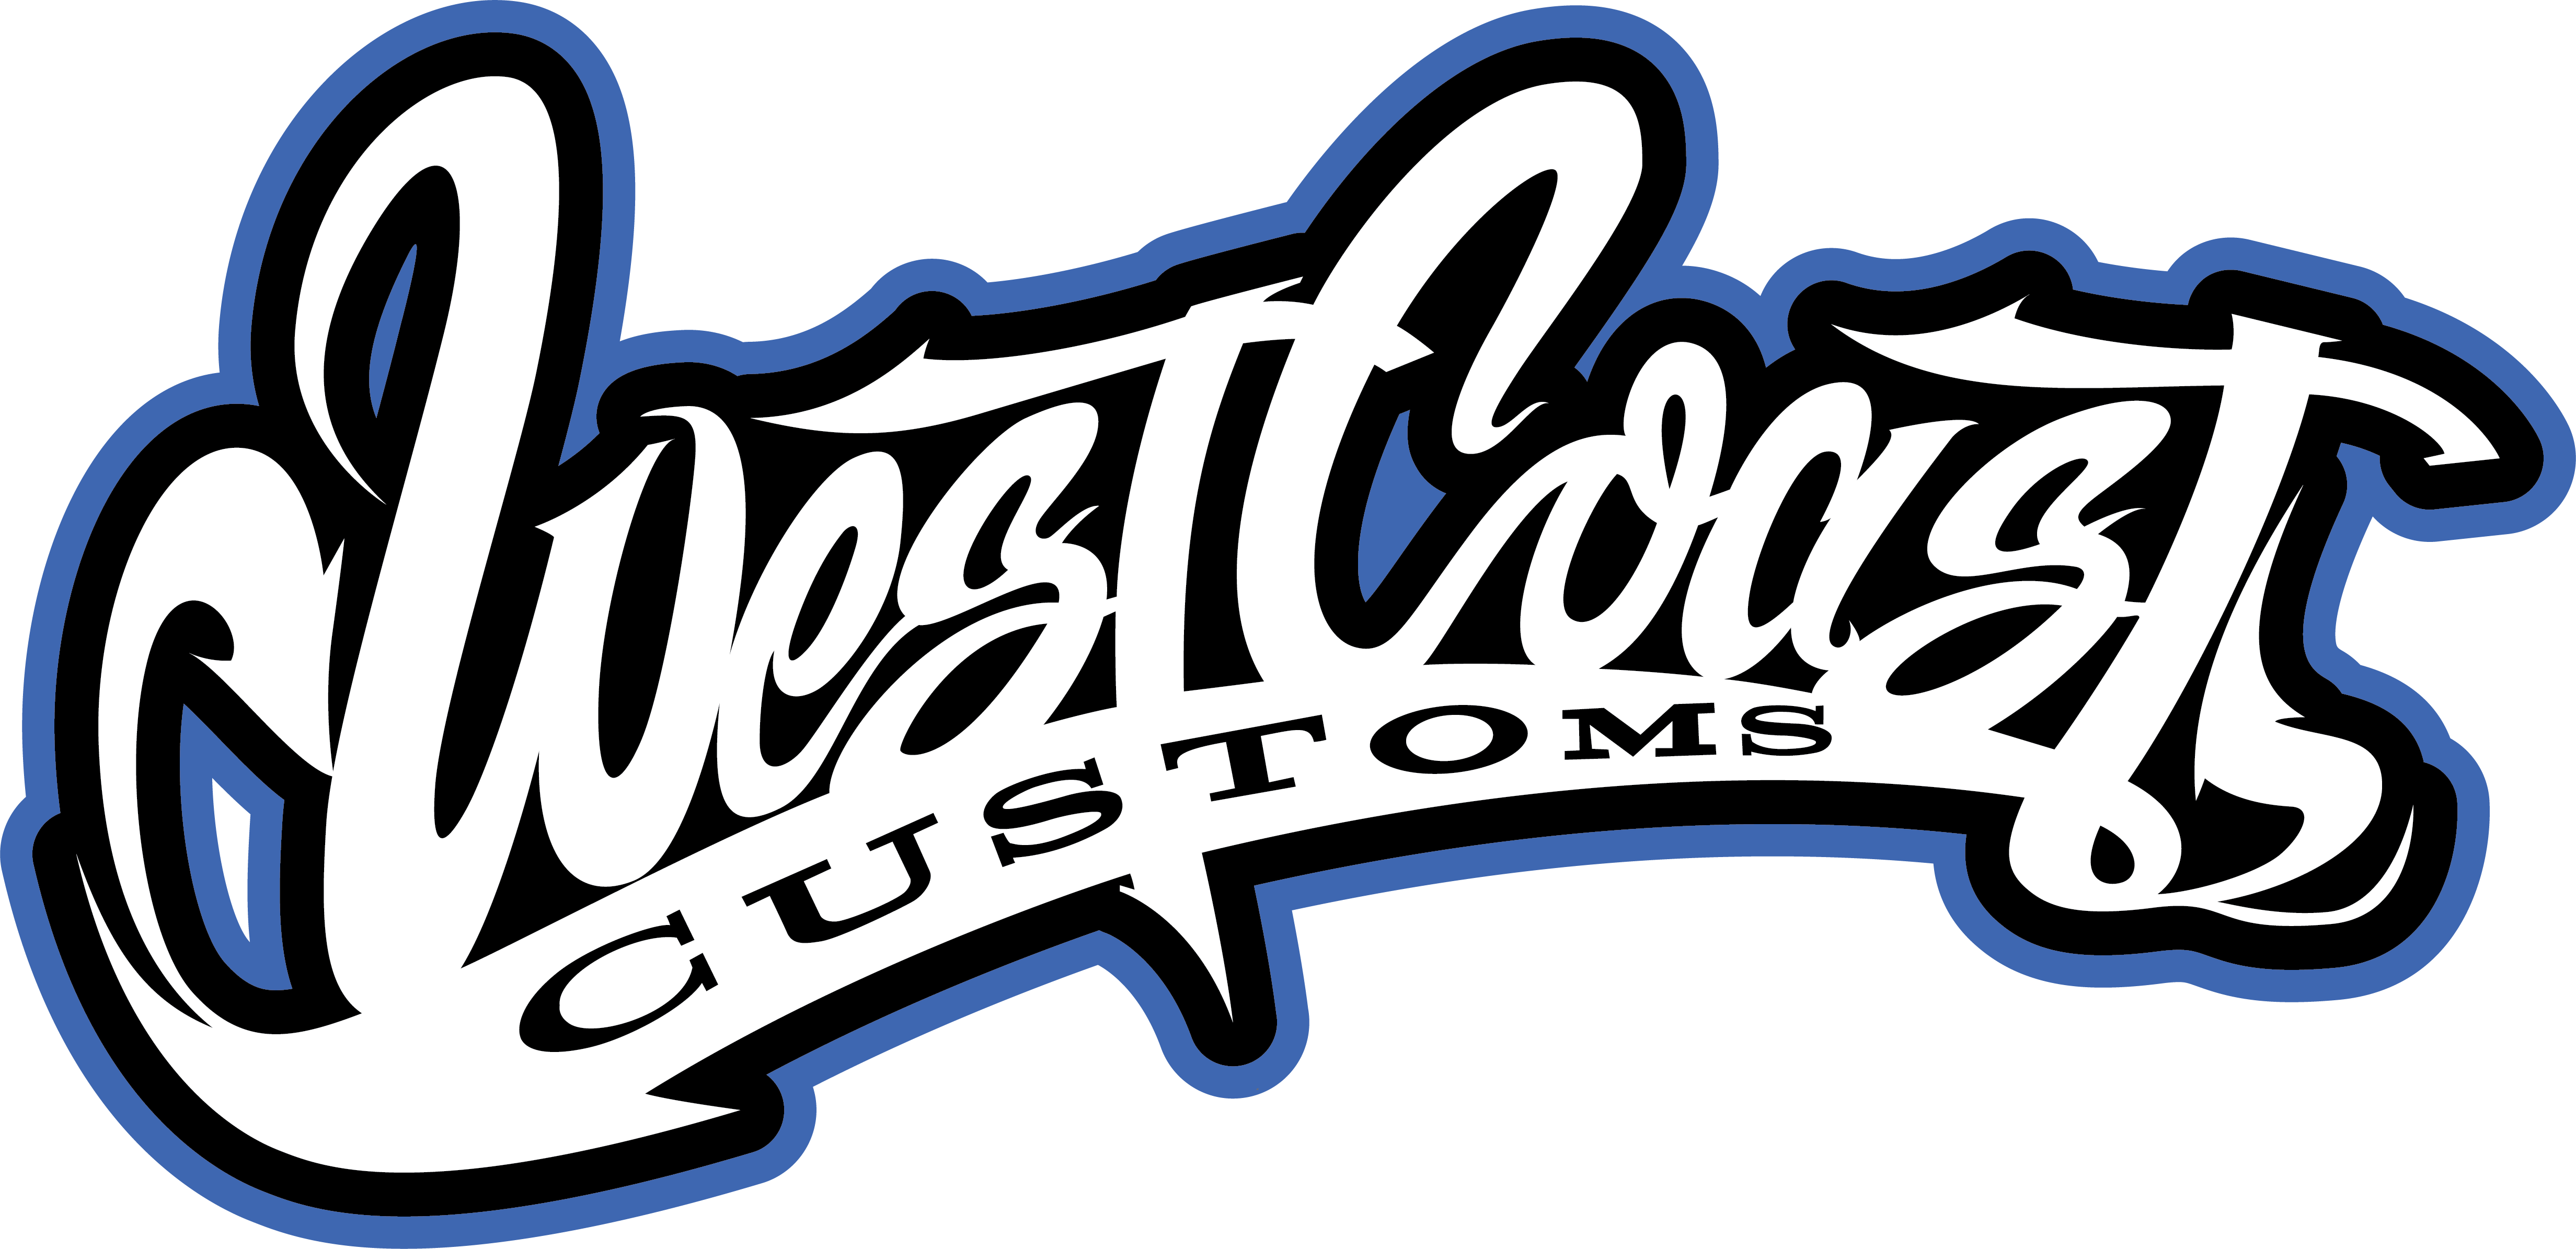 West Coast Customs Tire & Trim Shine - image 2 of 2